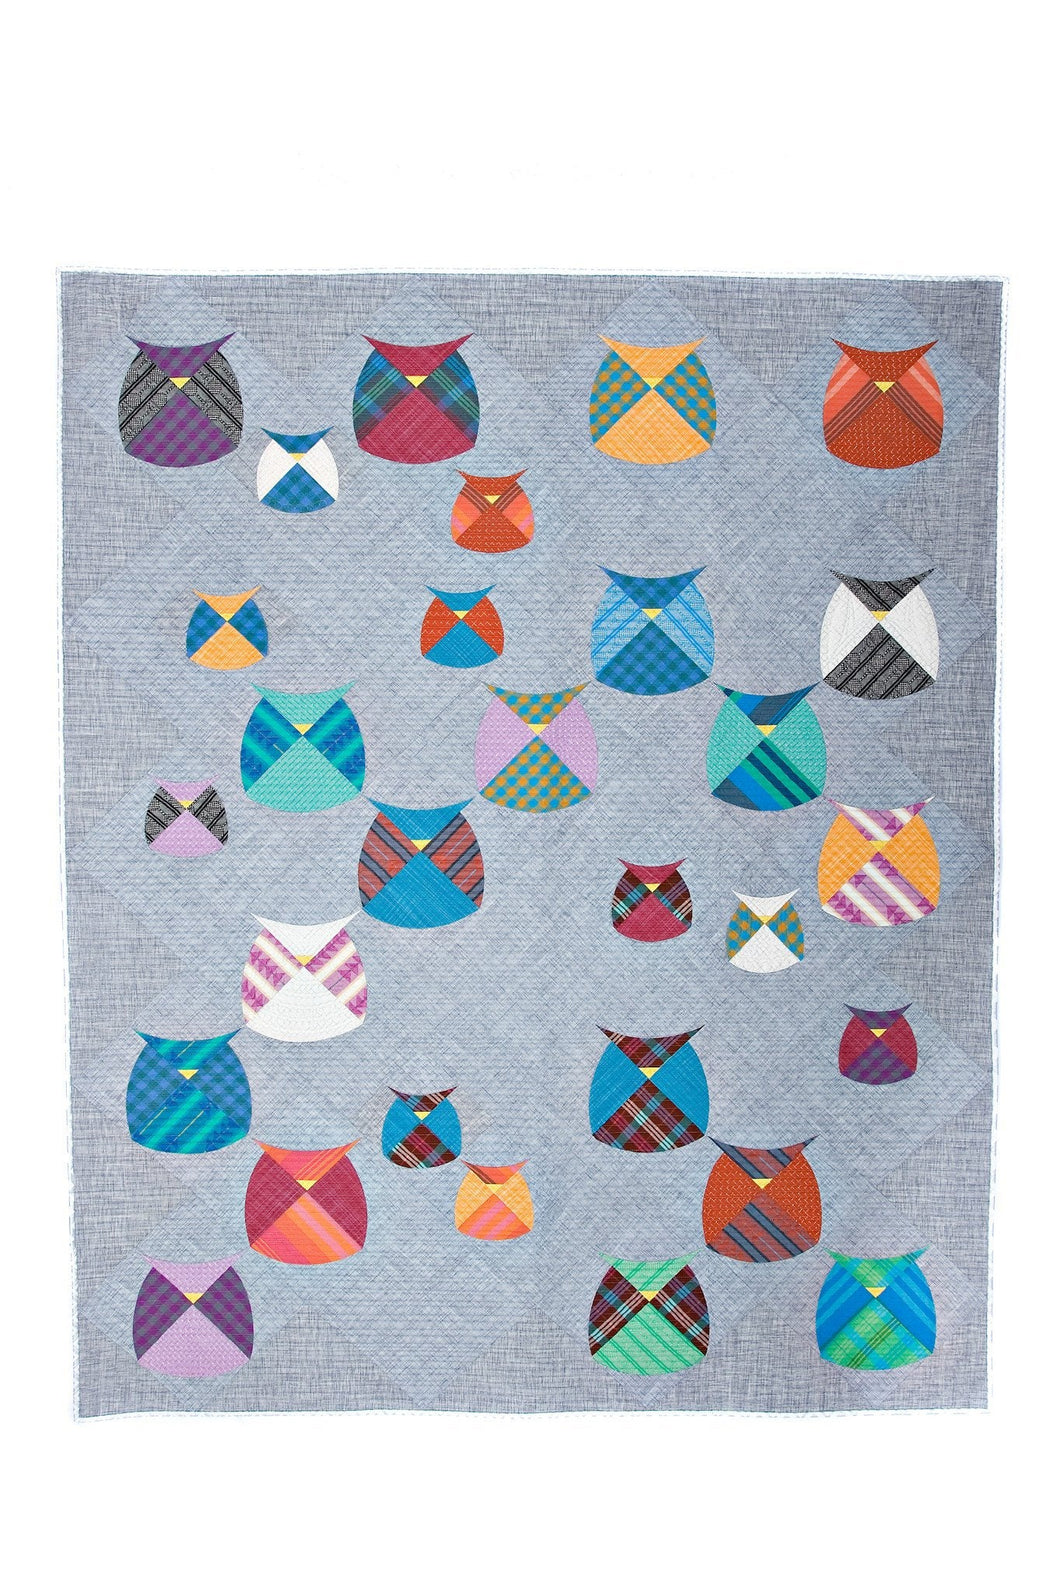 Mod Owl Quilt Pattern